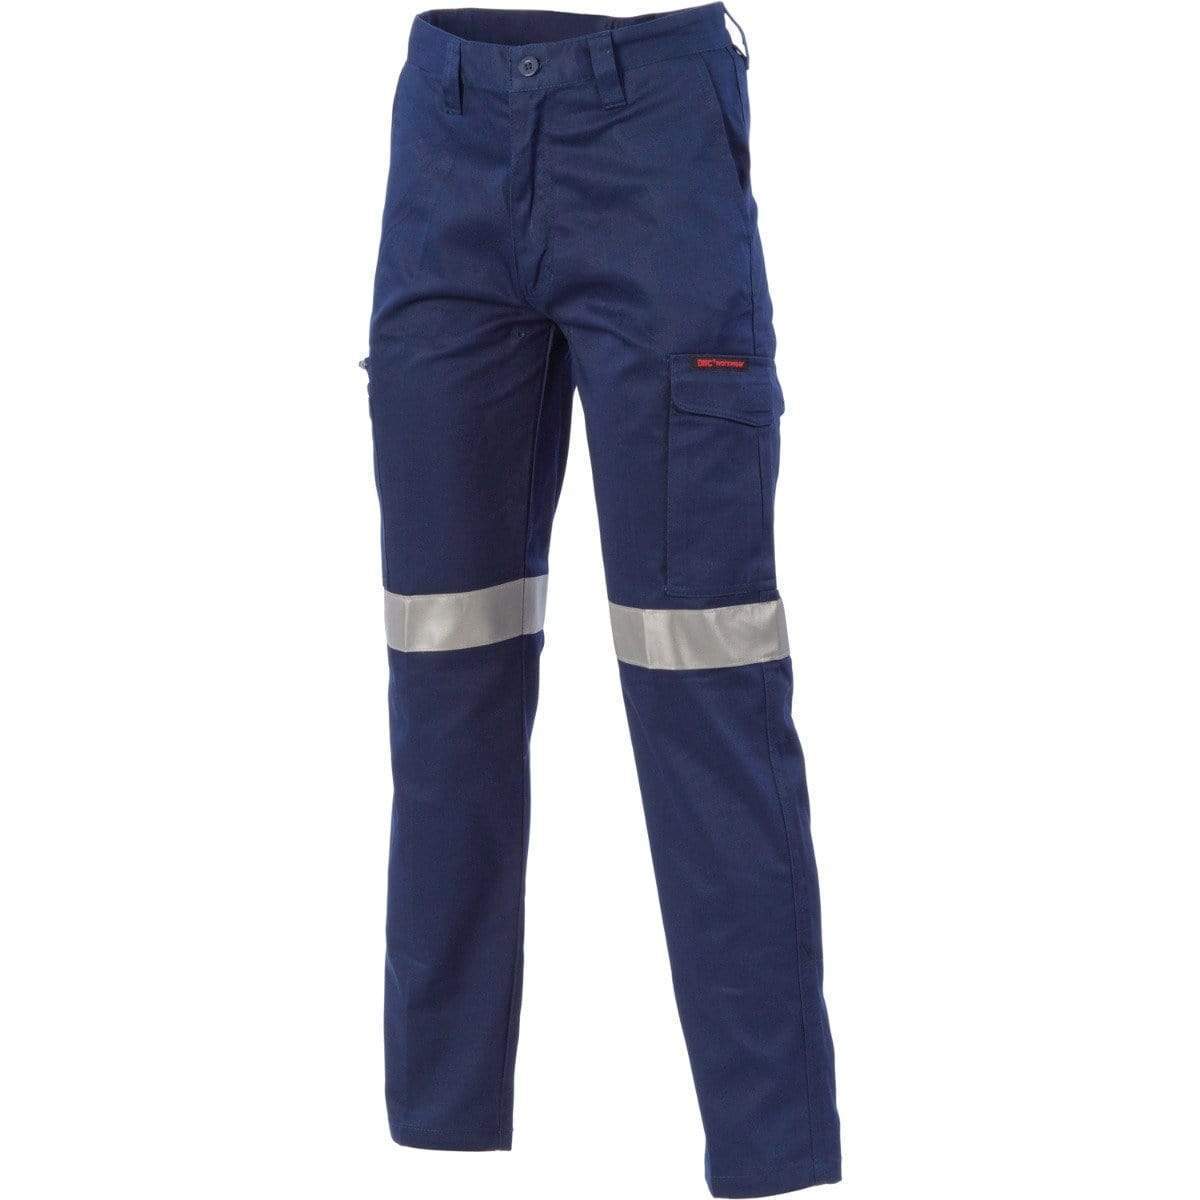 Dnc Workwear Digga Cool -breeze Cargo Taped Pants - 3353 Work Wear DNC Workwear Navy 72R 